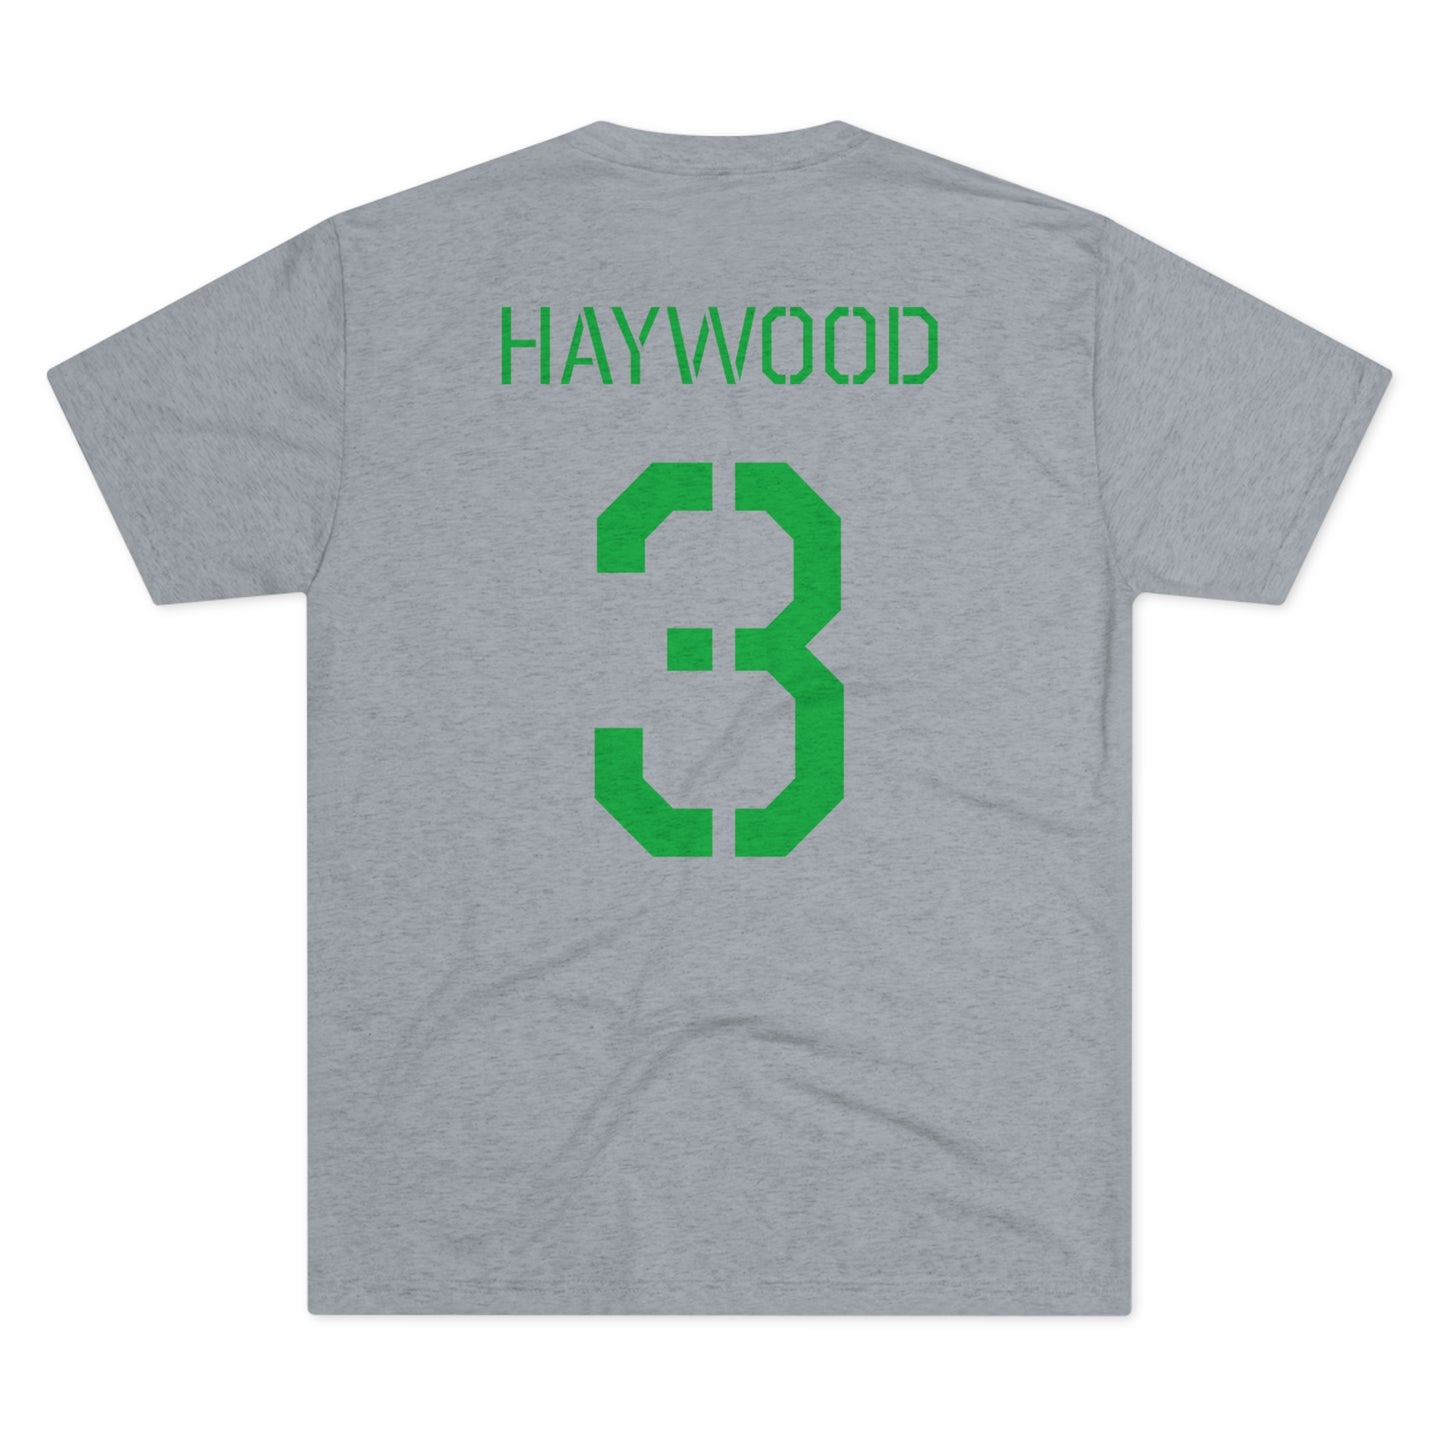 HAYWOOD #3 (option C) - Unisex Tri-Blend Crew Tee